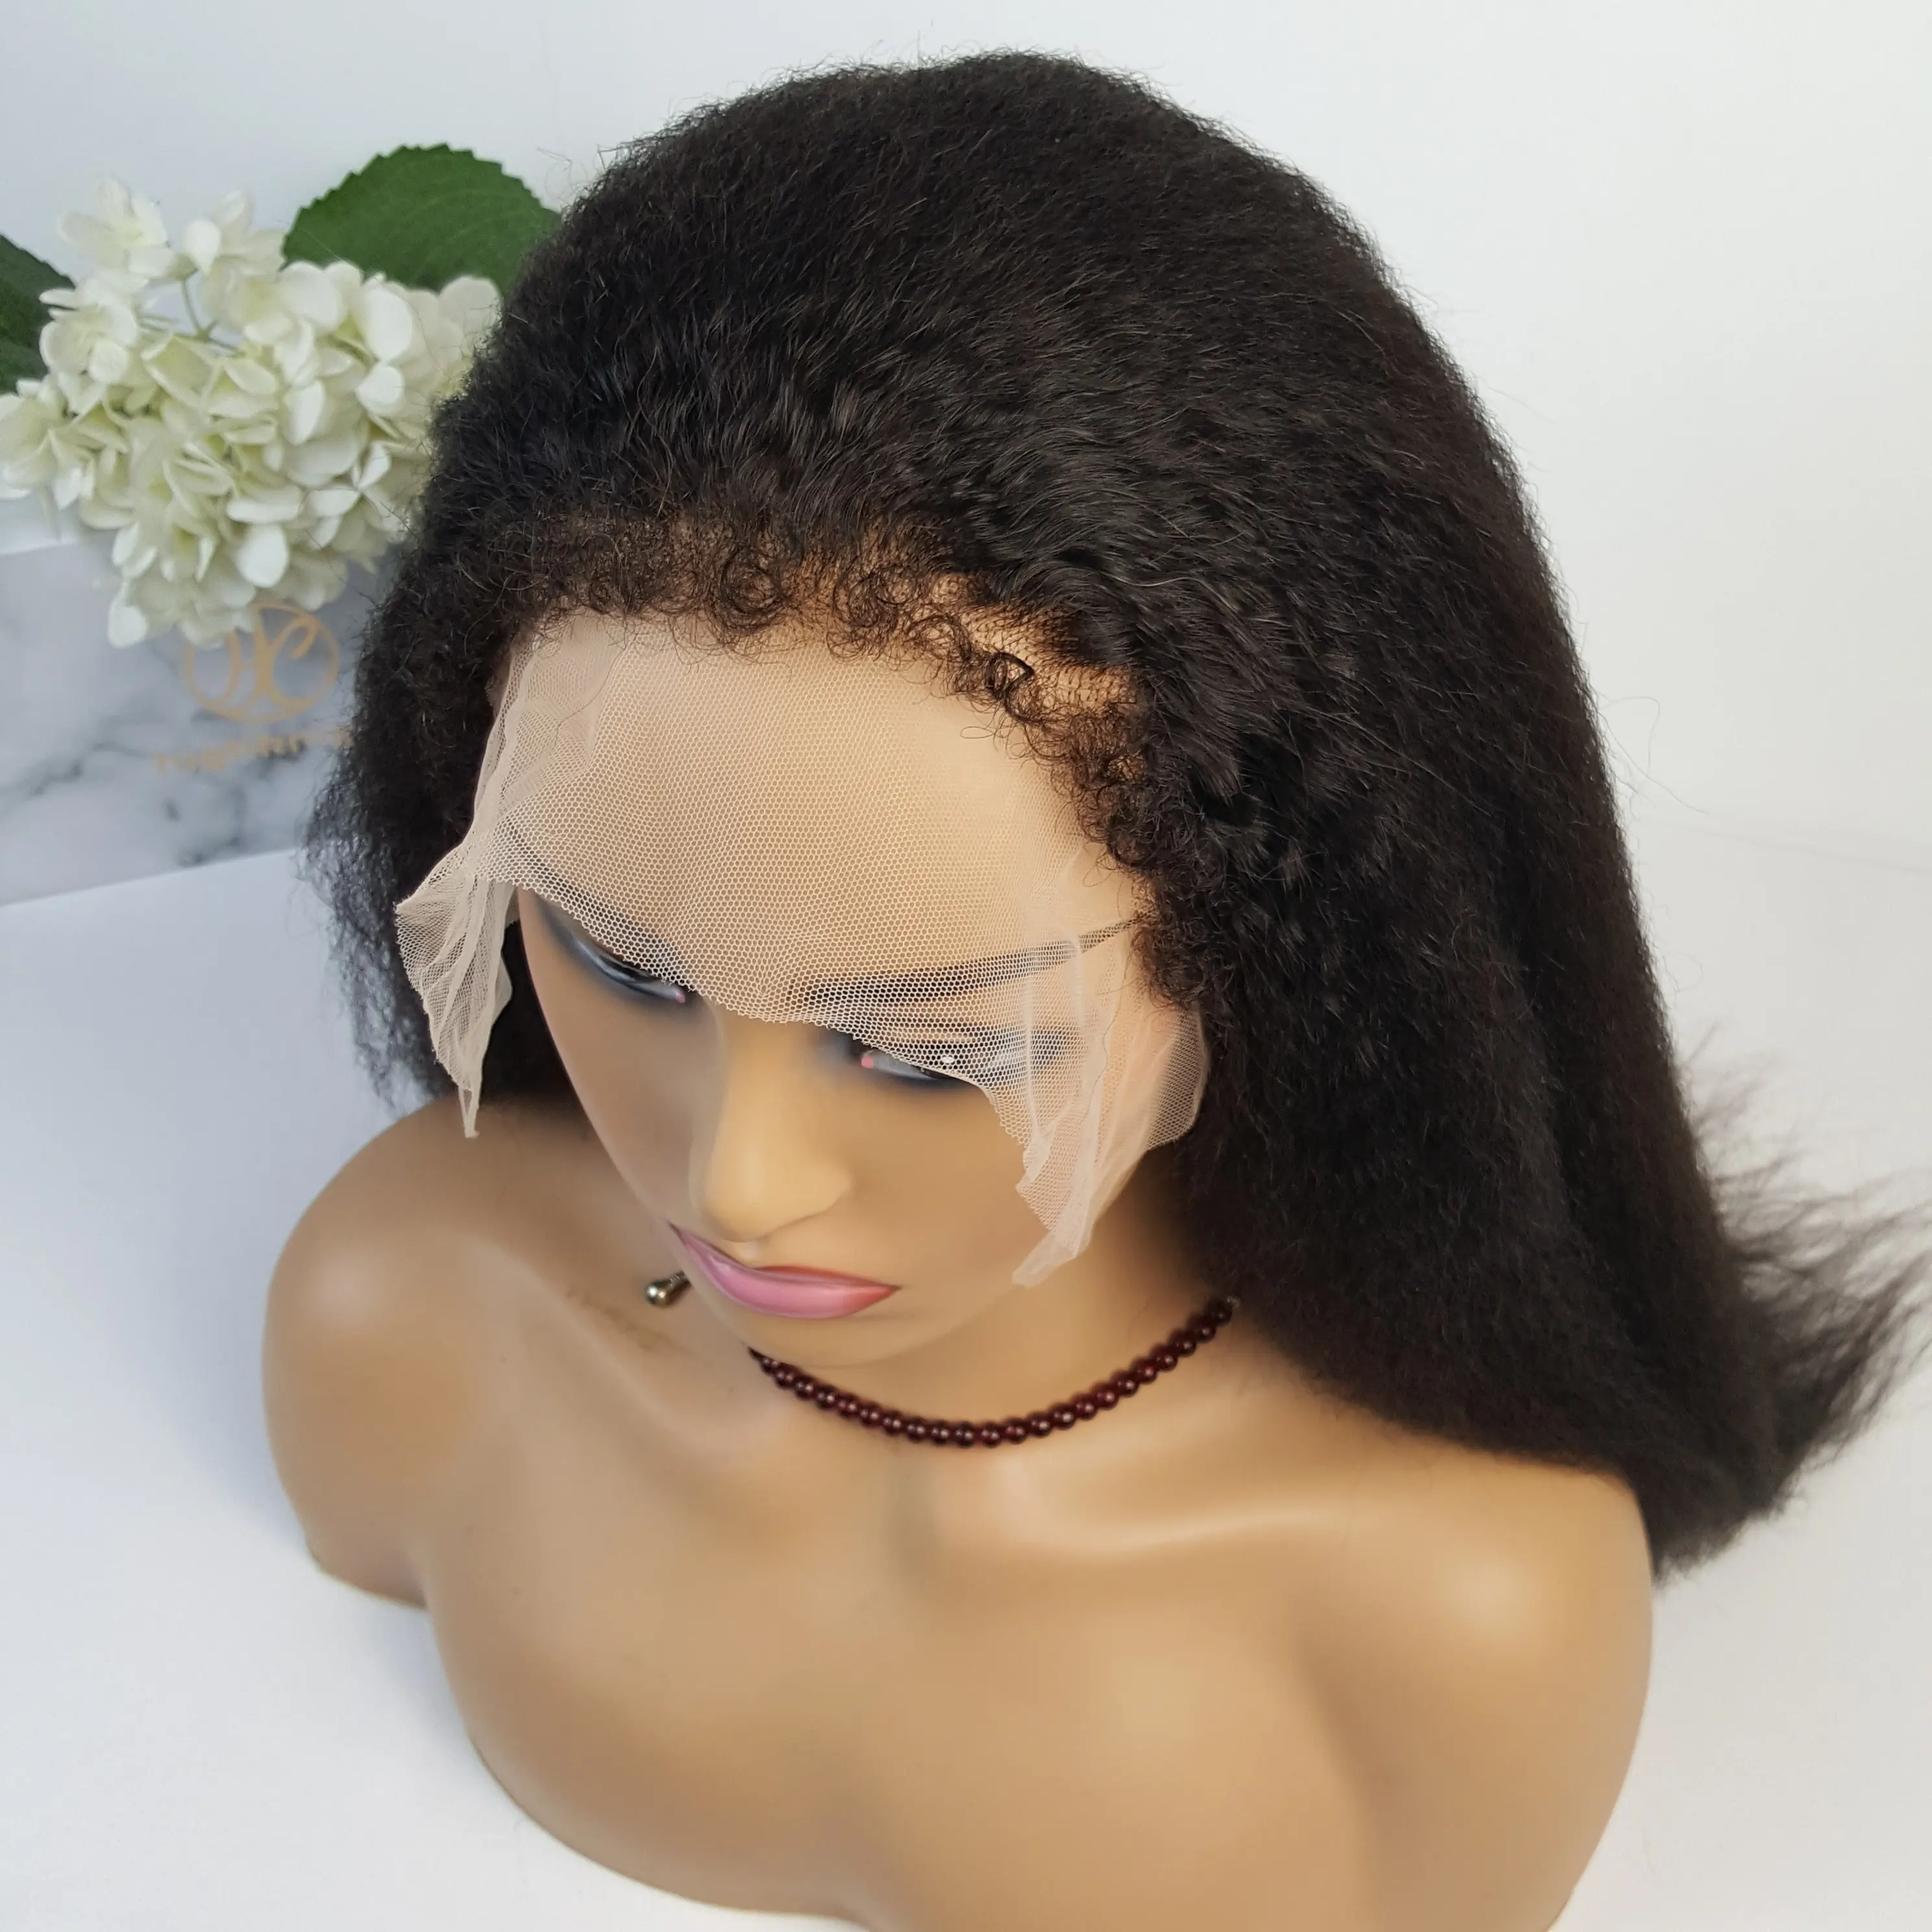 Highknight-Peluca de cabello humano con bordes rizados, pelo Natural HD con cierre frontal de encaje